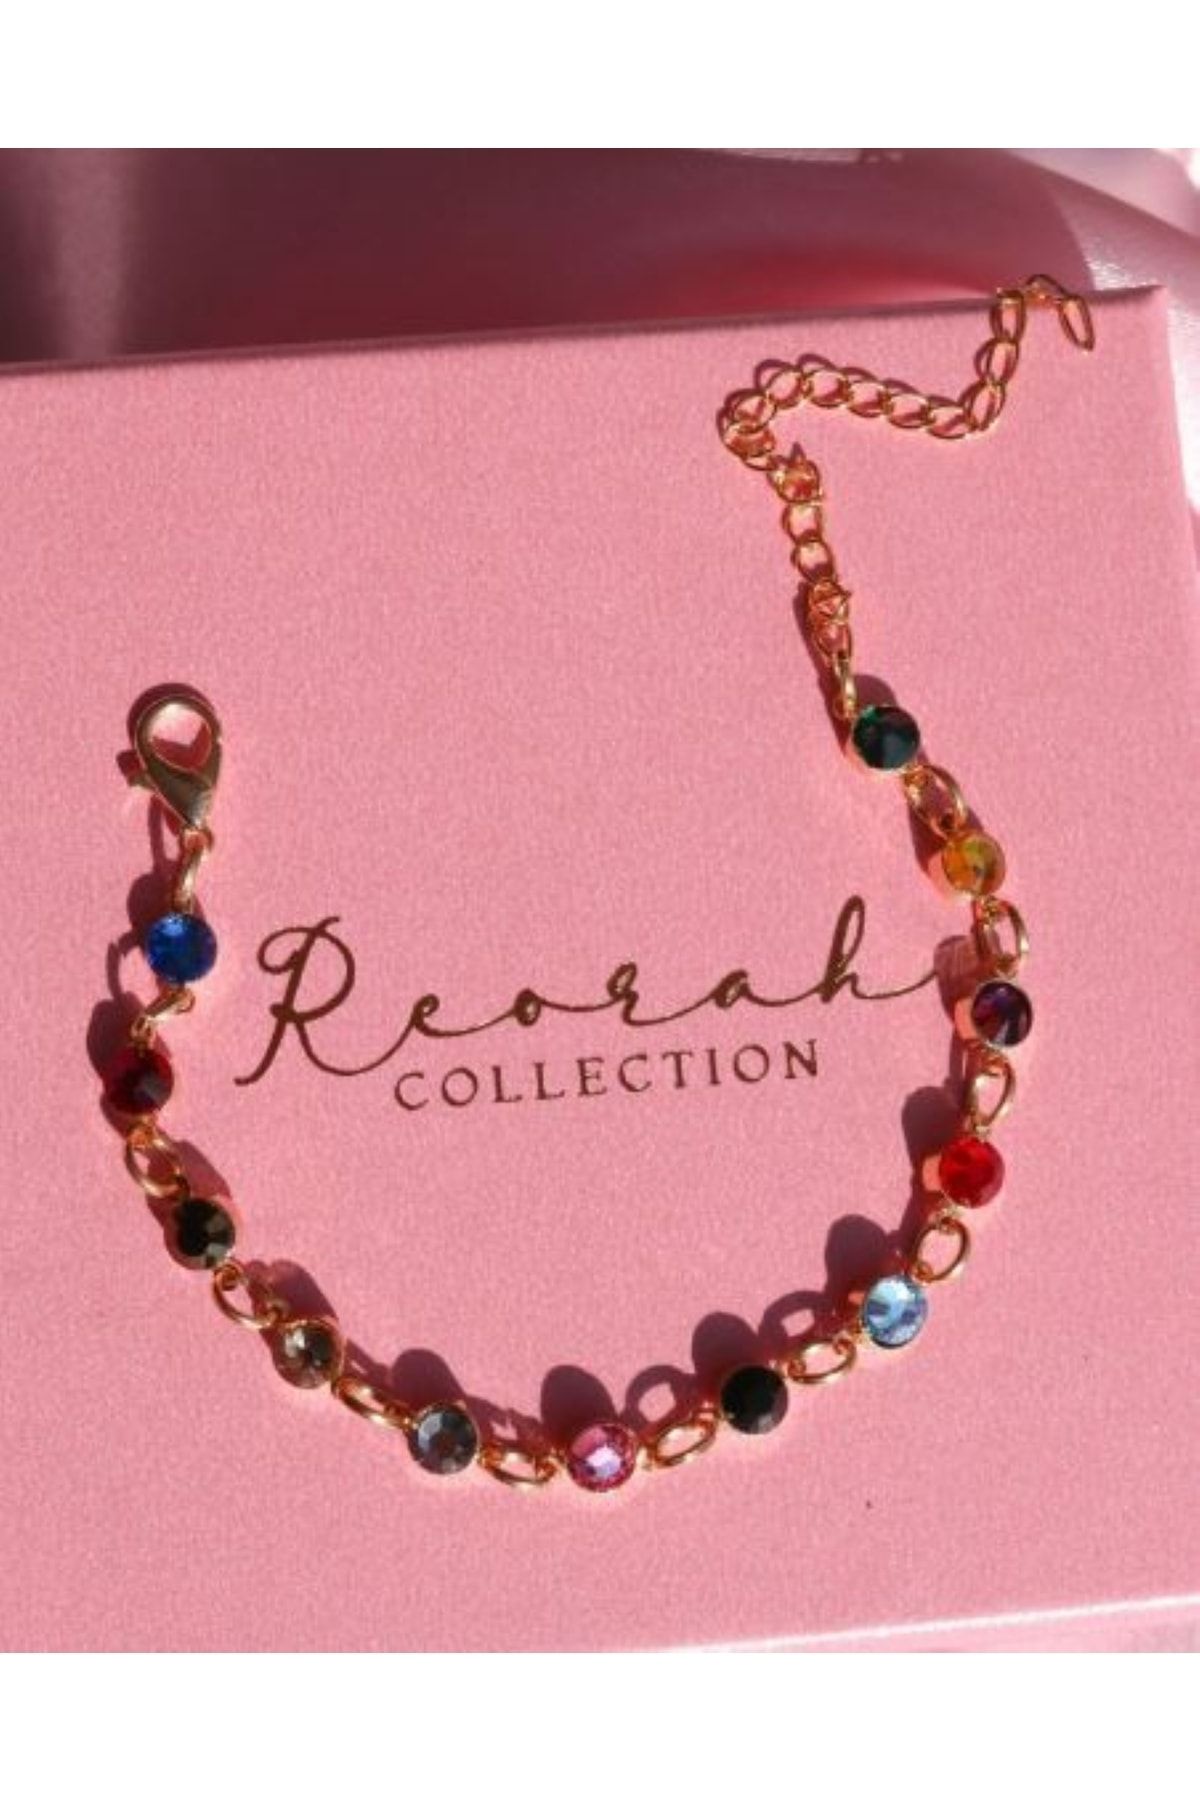 Reorah Collection Taylor Bejeweled Bileklik